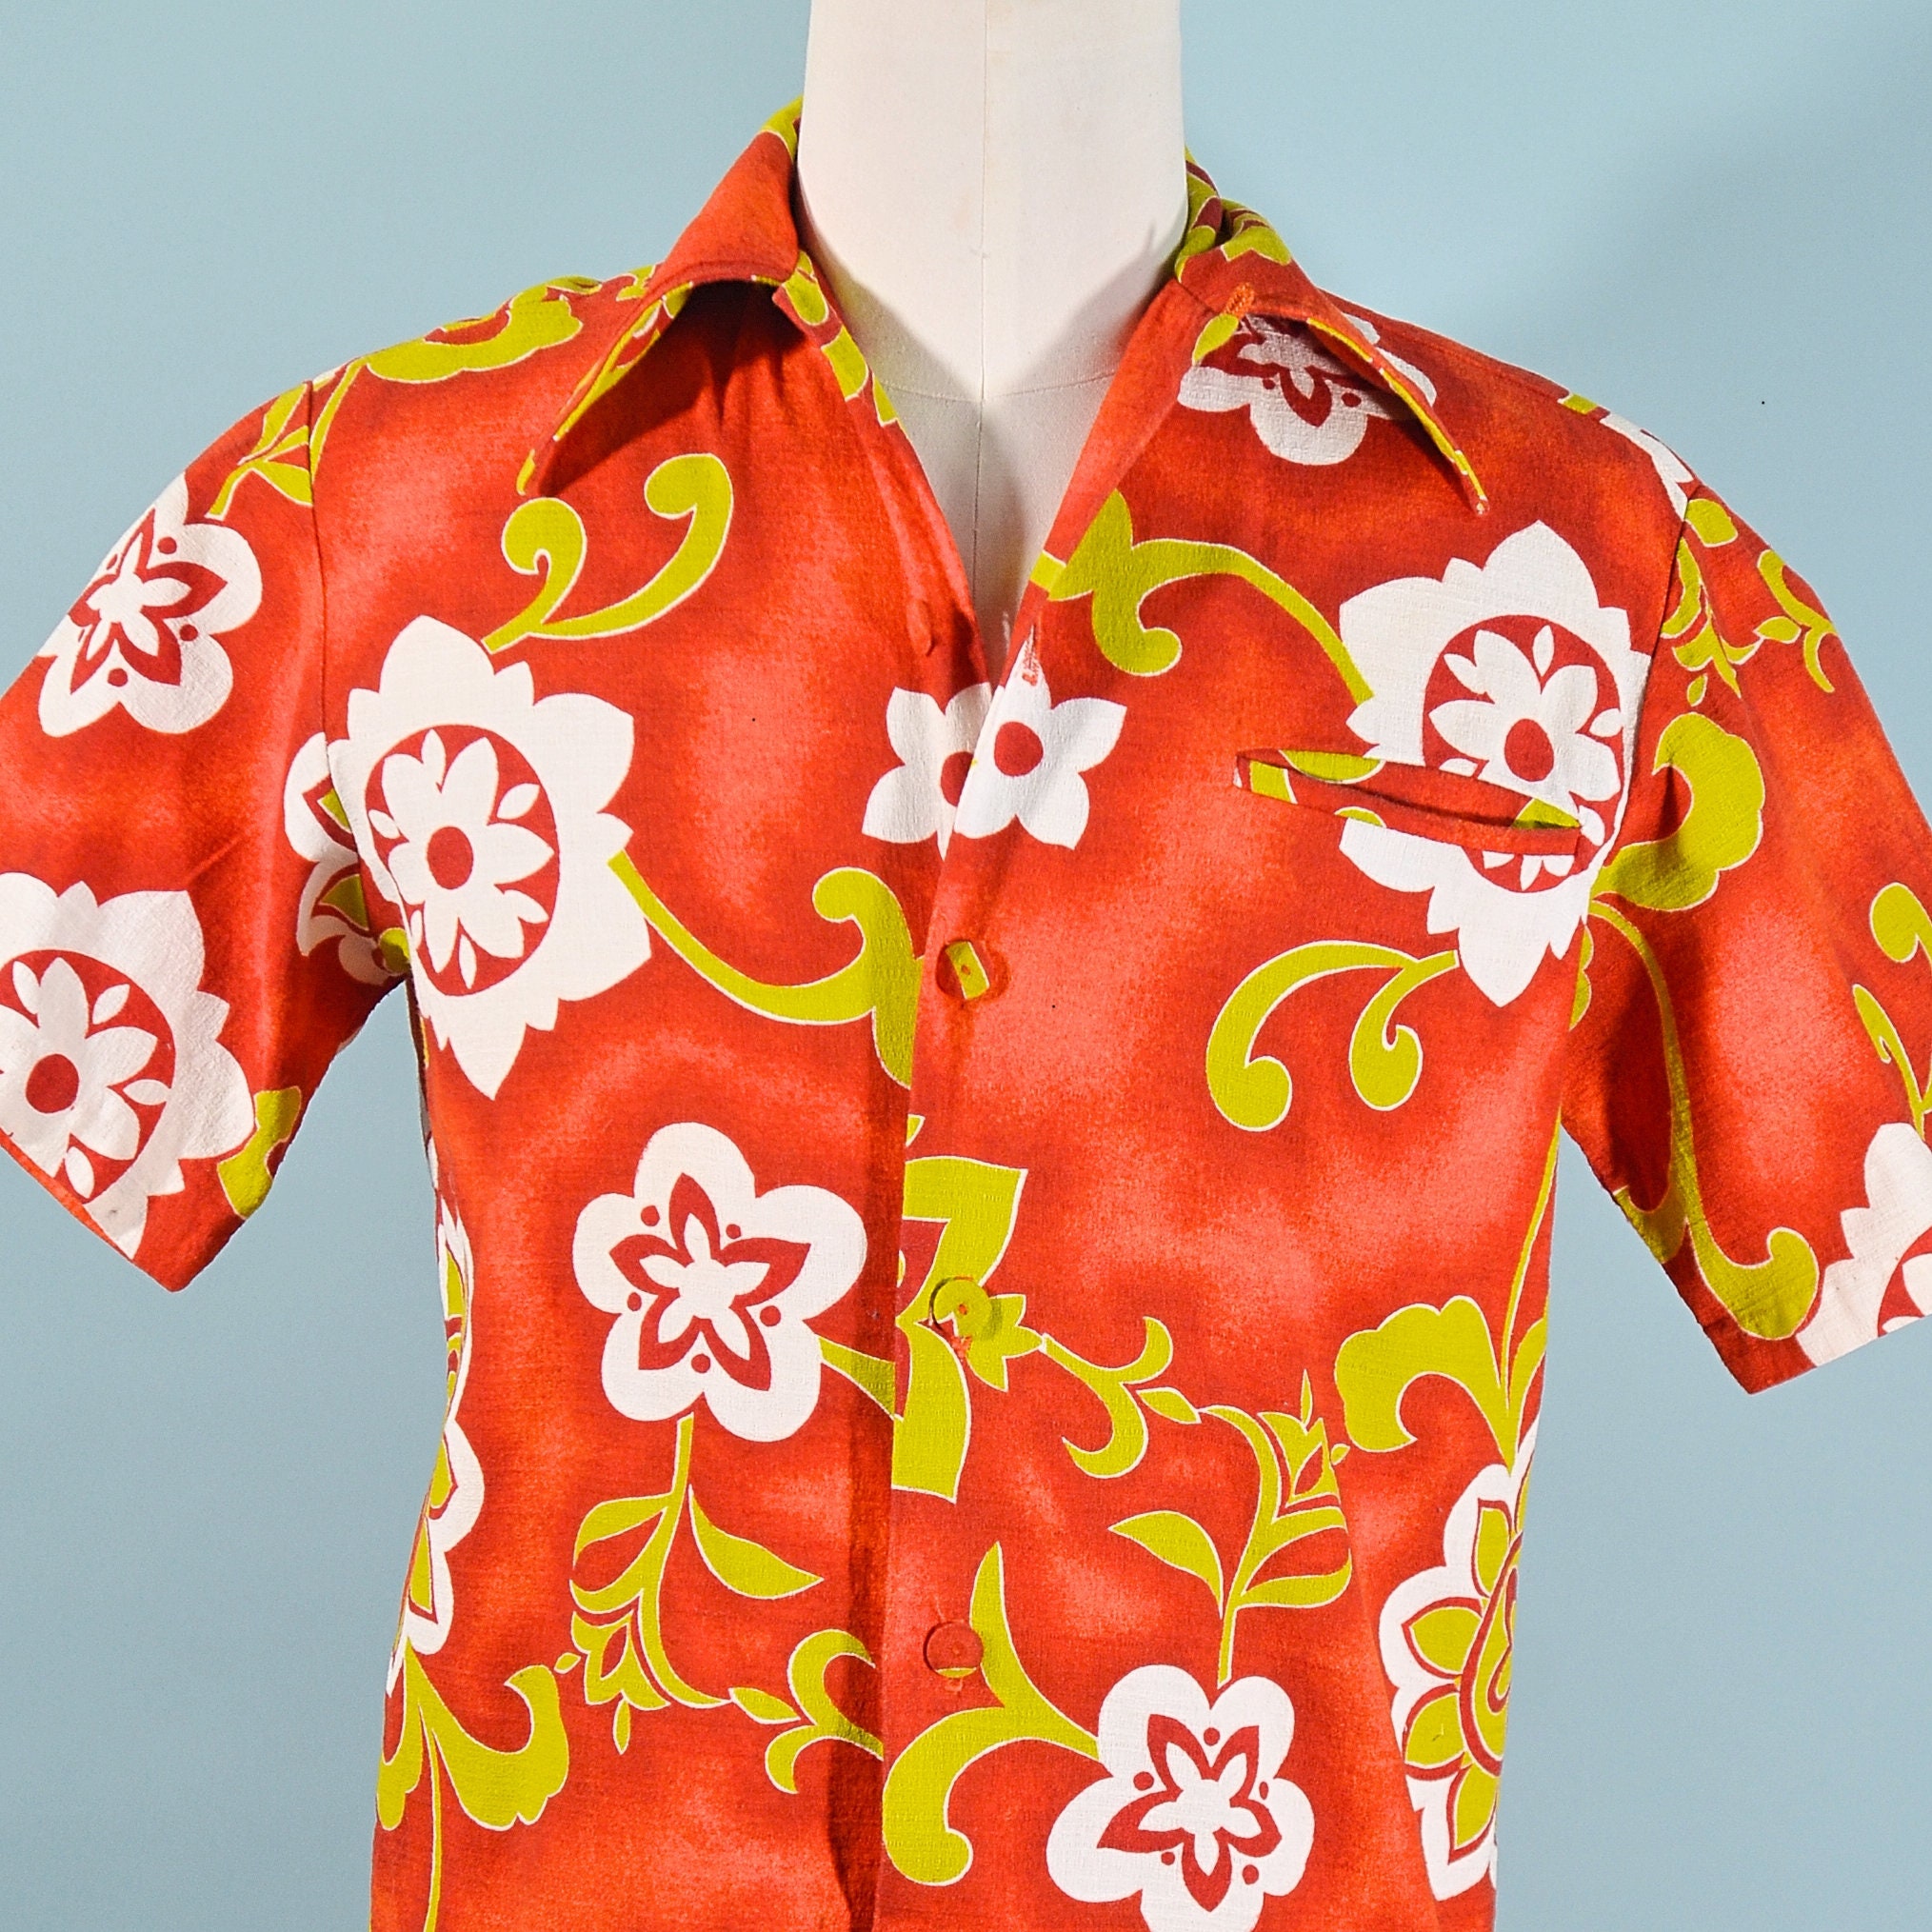 PapillonVintageShop Neon Bright Vintage 60s/70s Hawaiian Aloha Shirt, Collar Loop Polynesian Tiki Shirt by Pacific Isle, Slim Fit